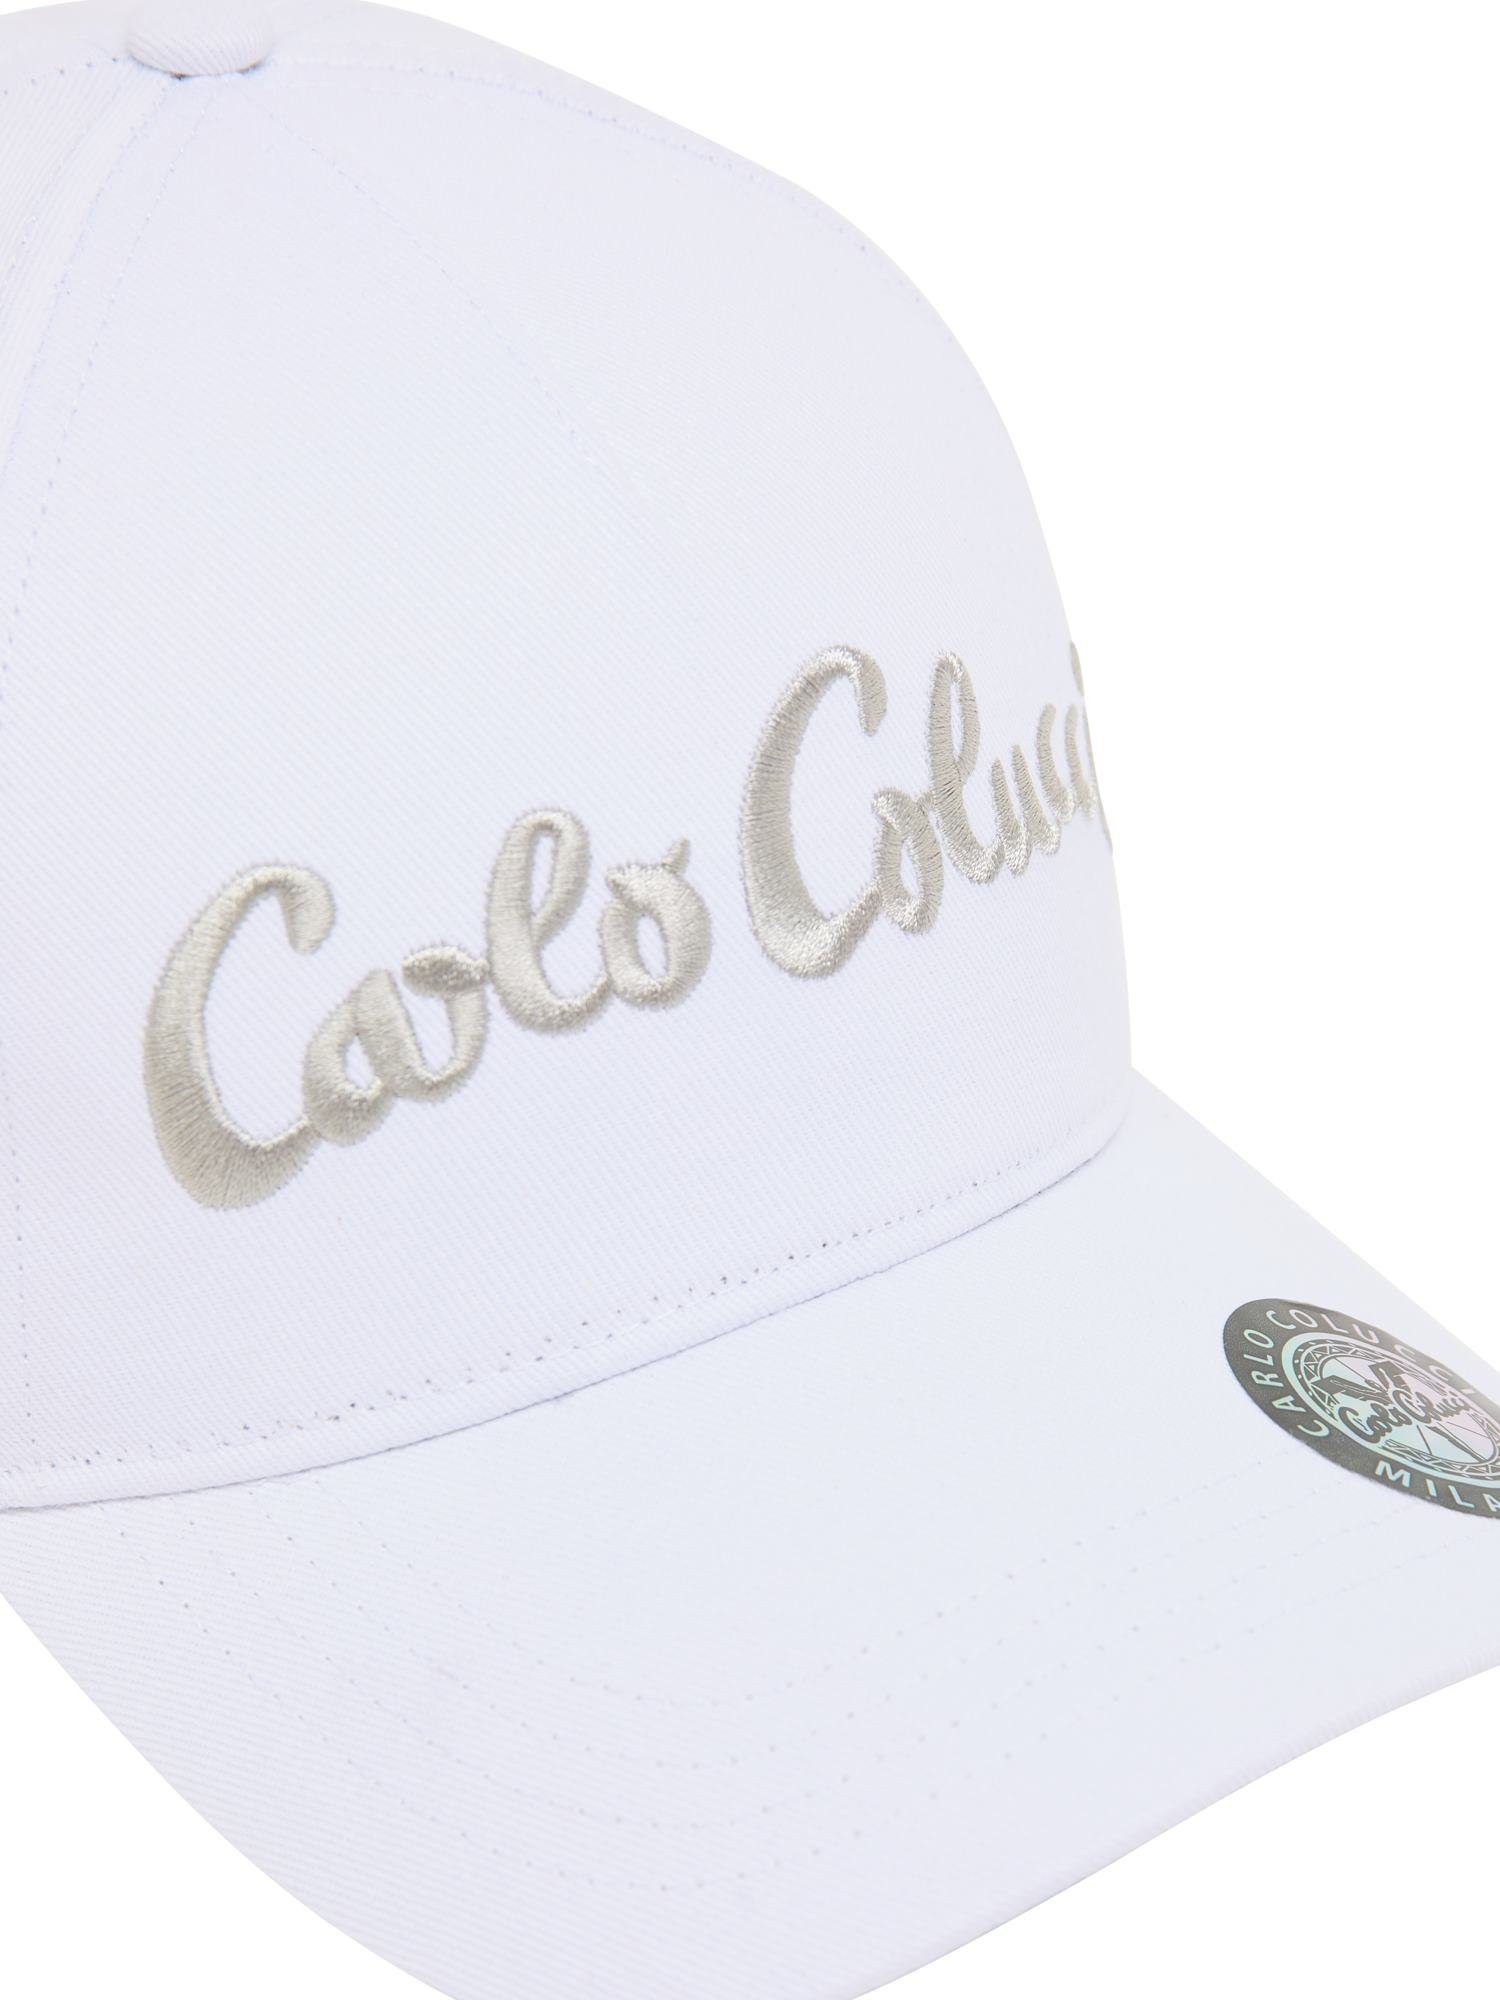 COLUCCI CARLO Coronet Baseball Cap